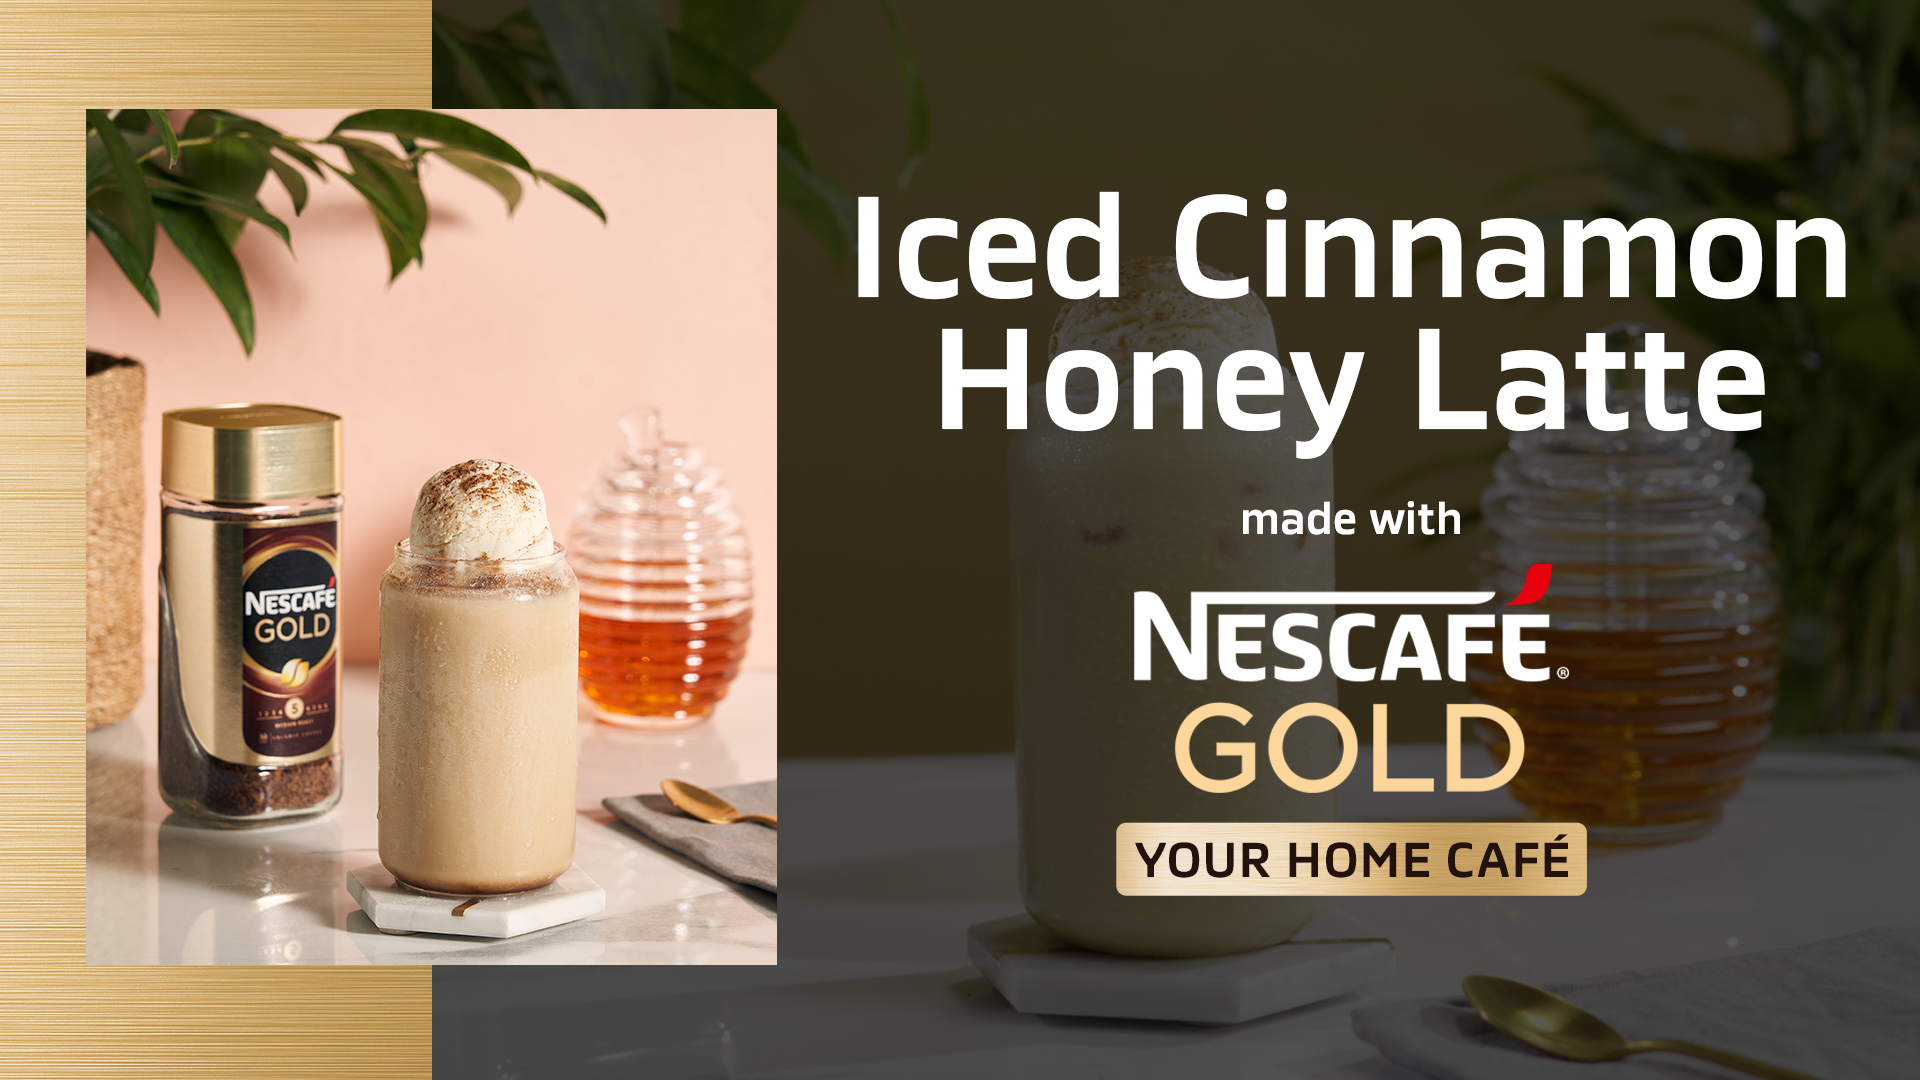 Iced Cinnamon Honey Latte recipe